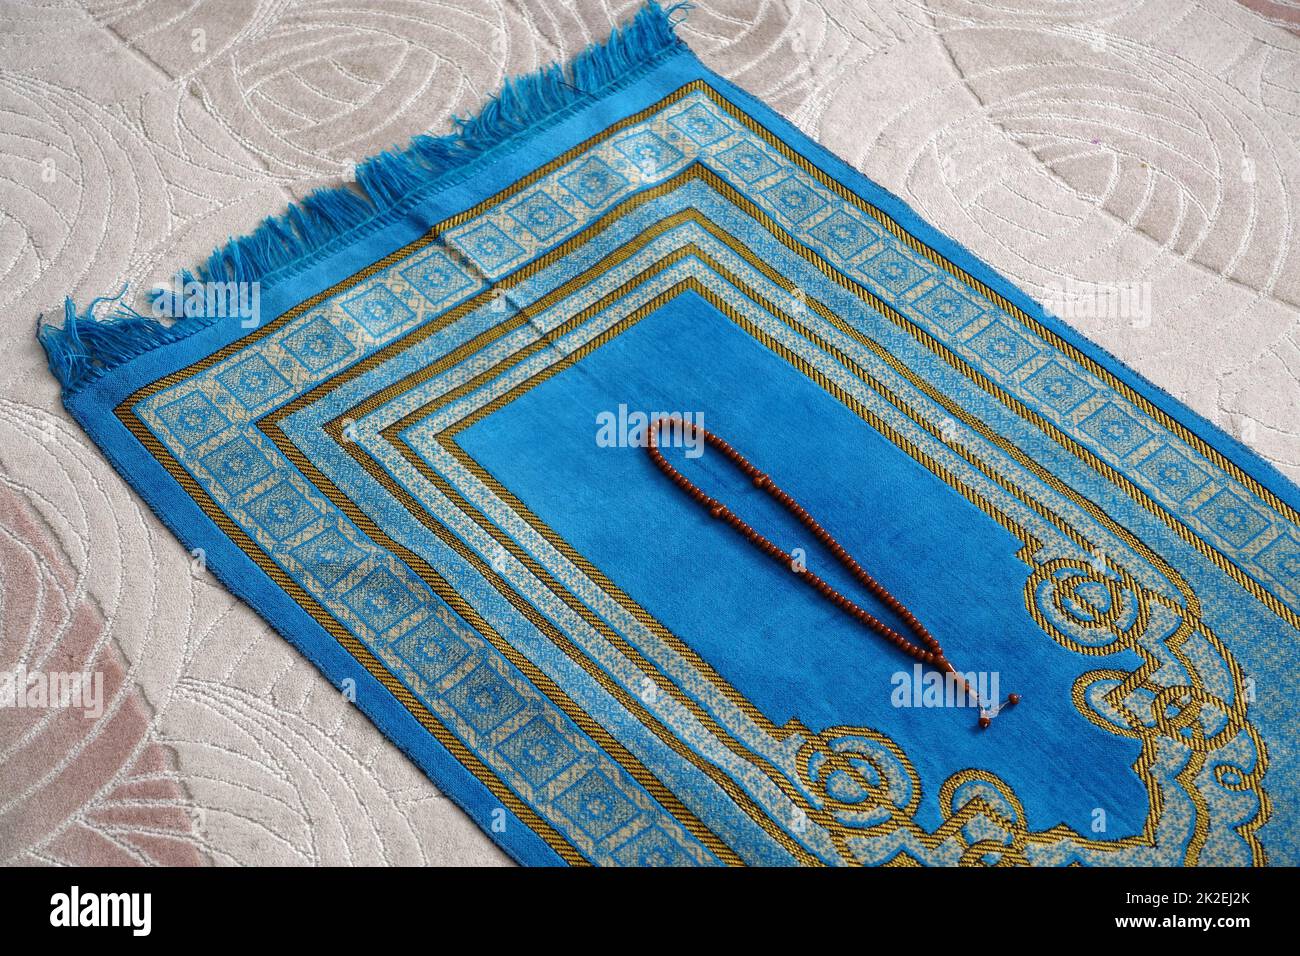 Ramadan month and prayer rug in Islam, prayer rug and rosary for praying in Ramadan Stock Photo